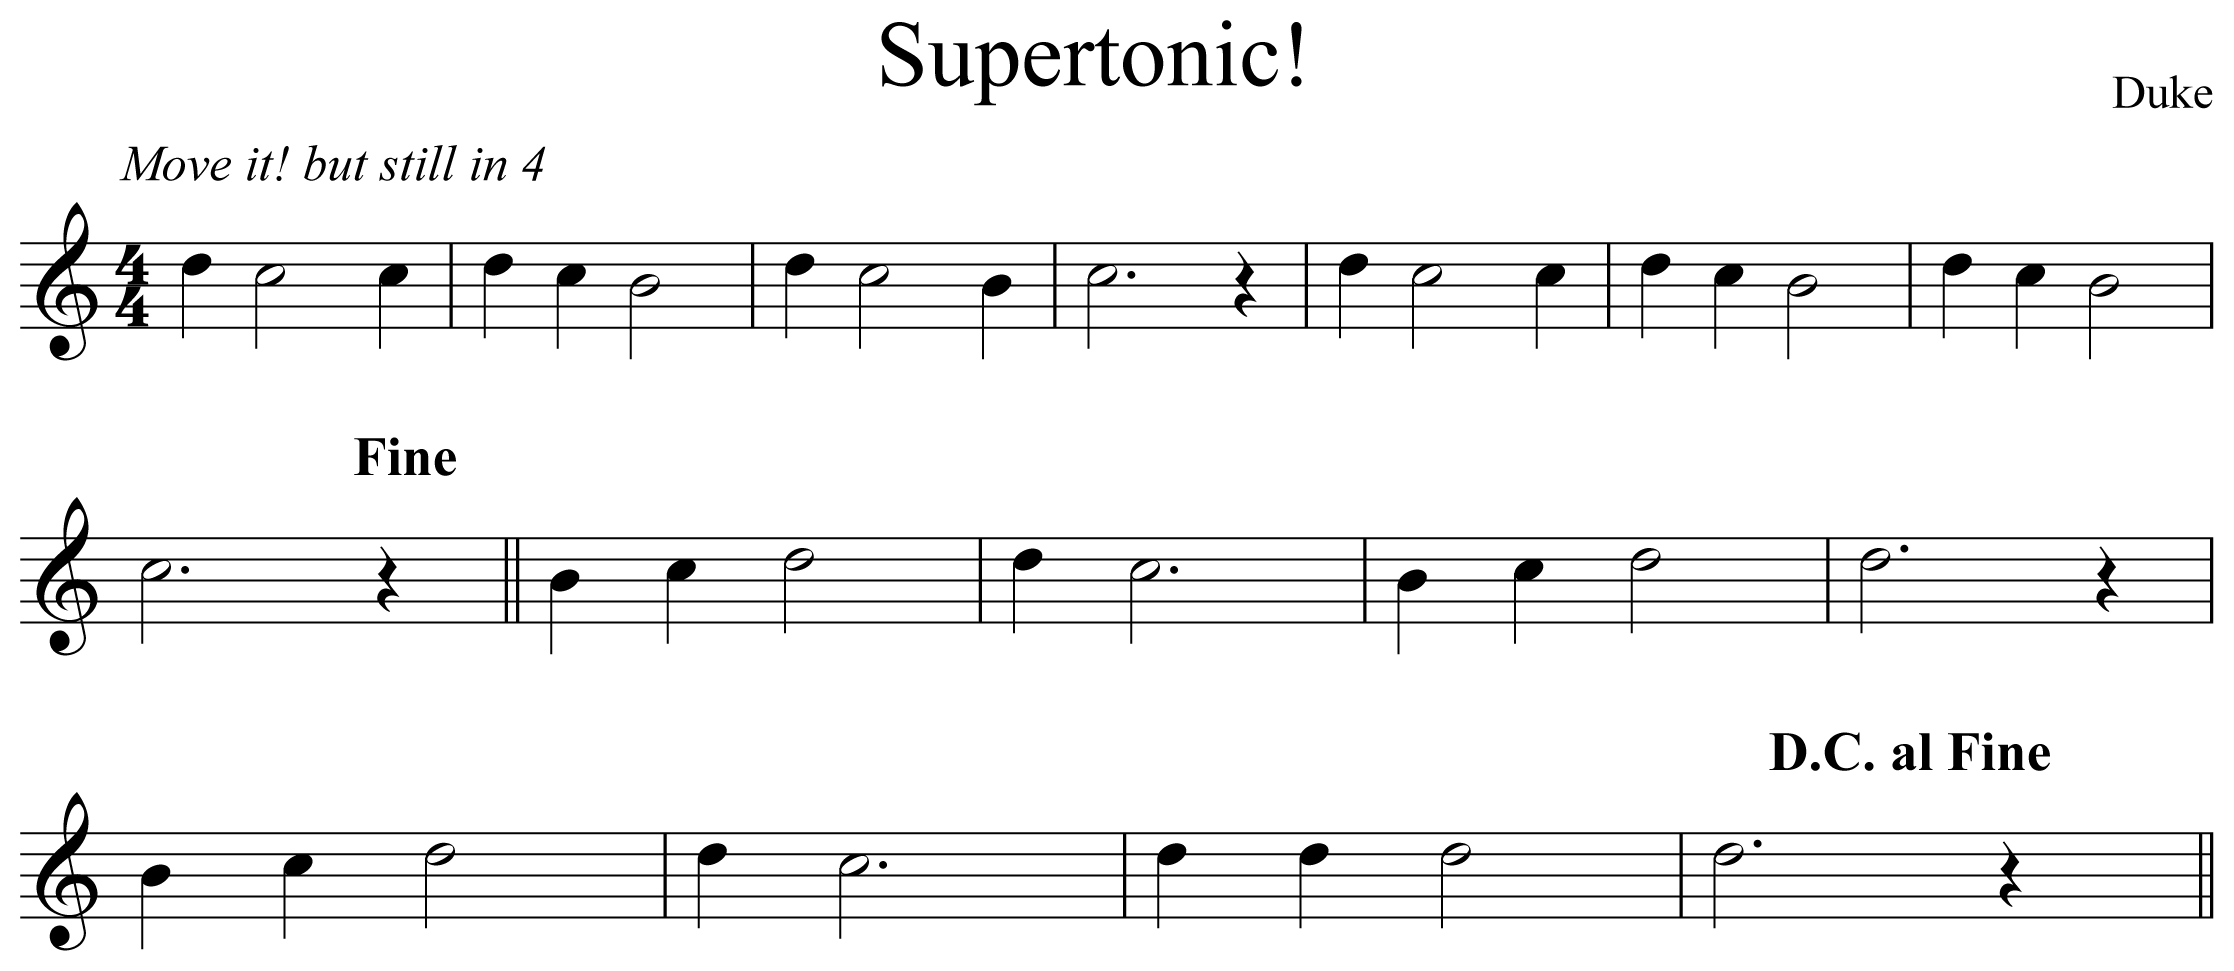 Supertonic! Notation Saxophone